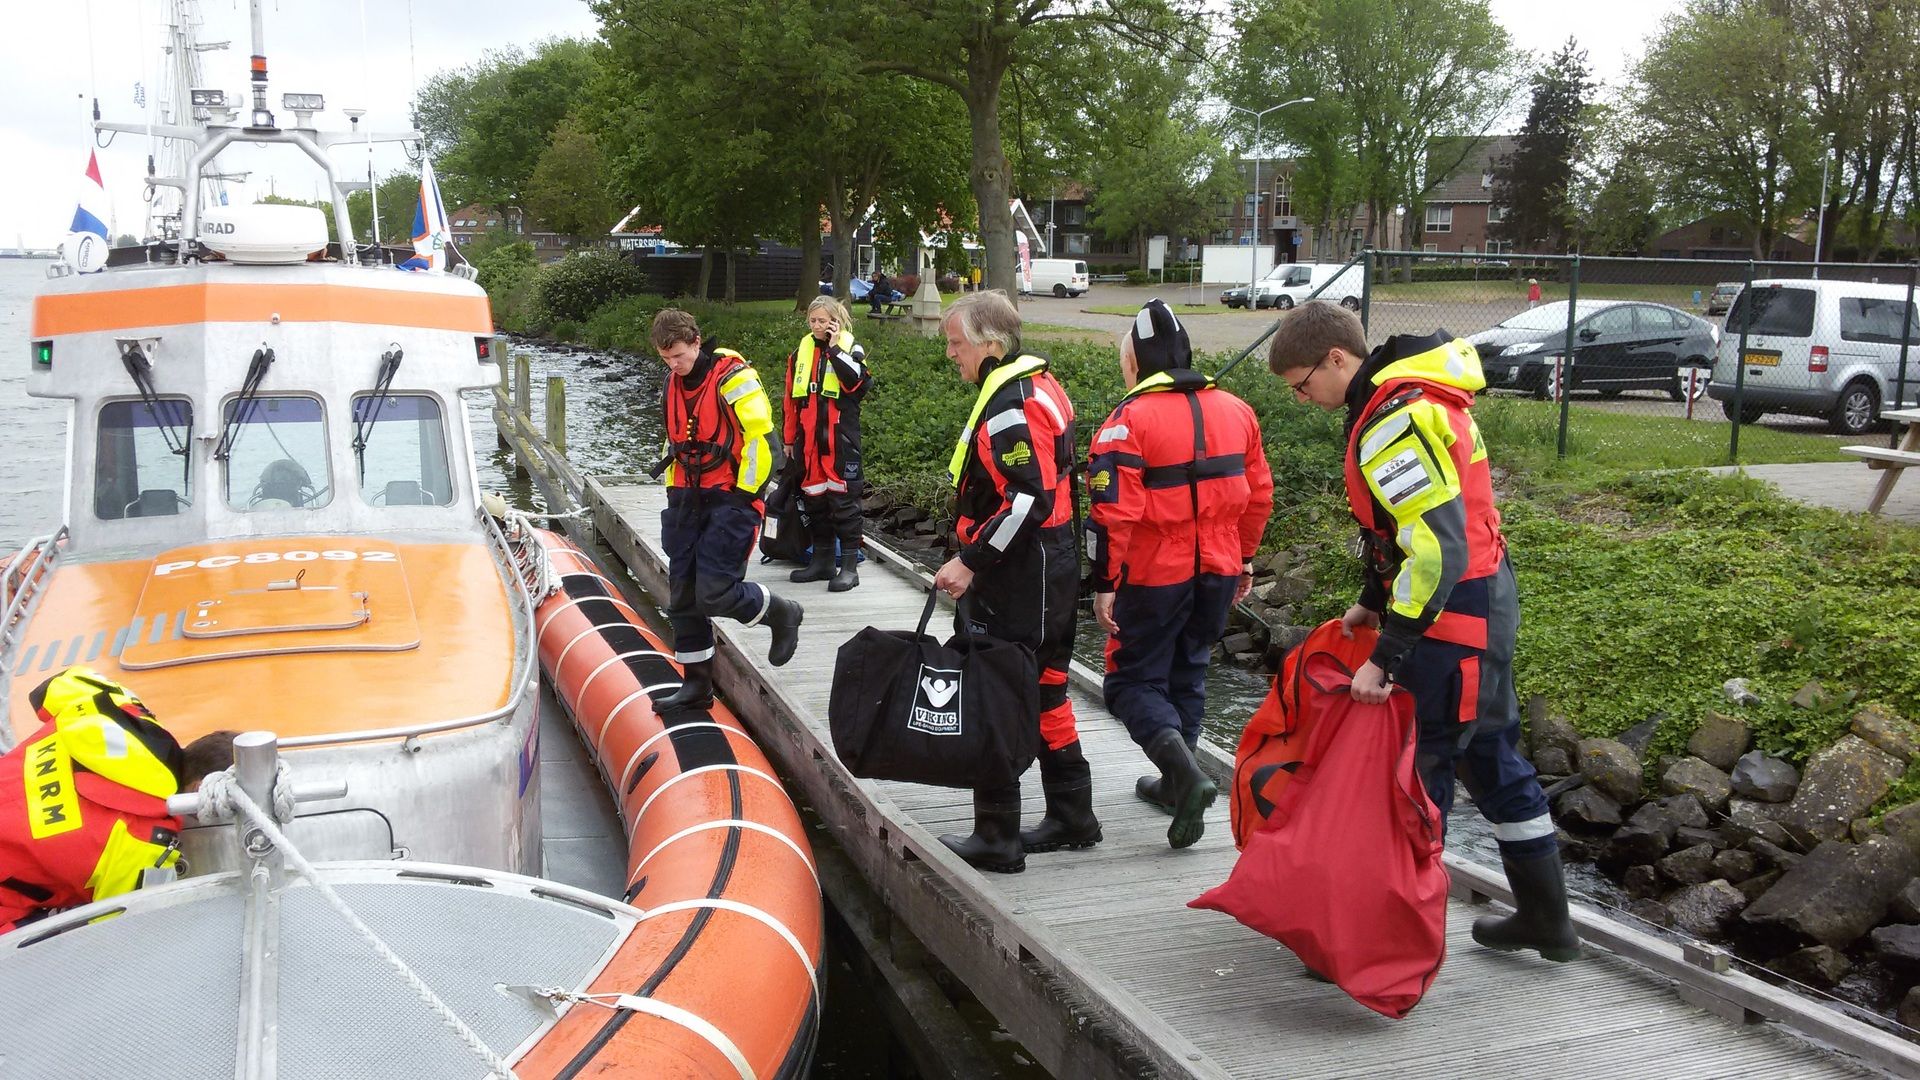 Raad van toezicht KNRM aat aan boord van reddingboot Watersport